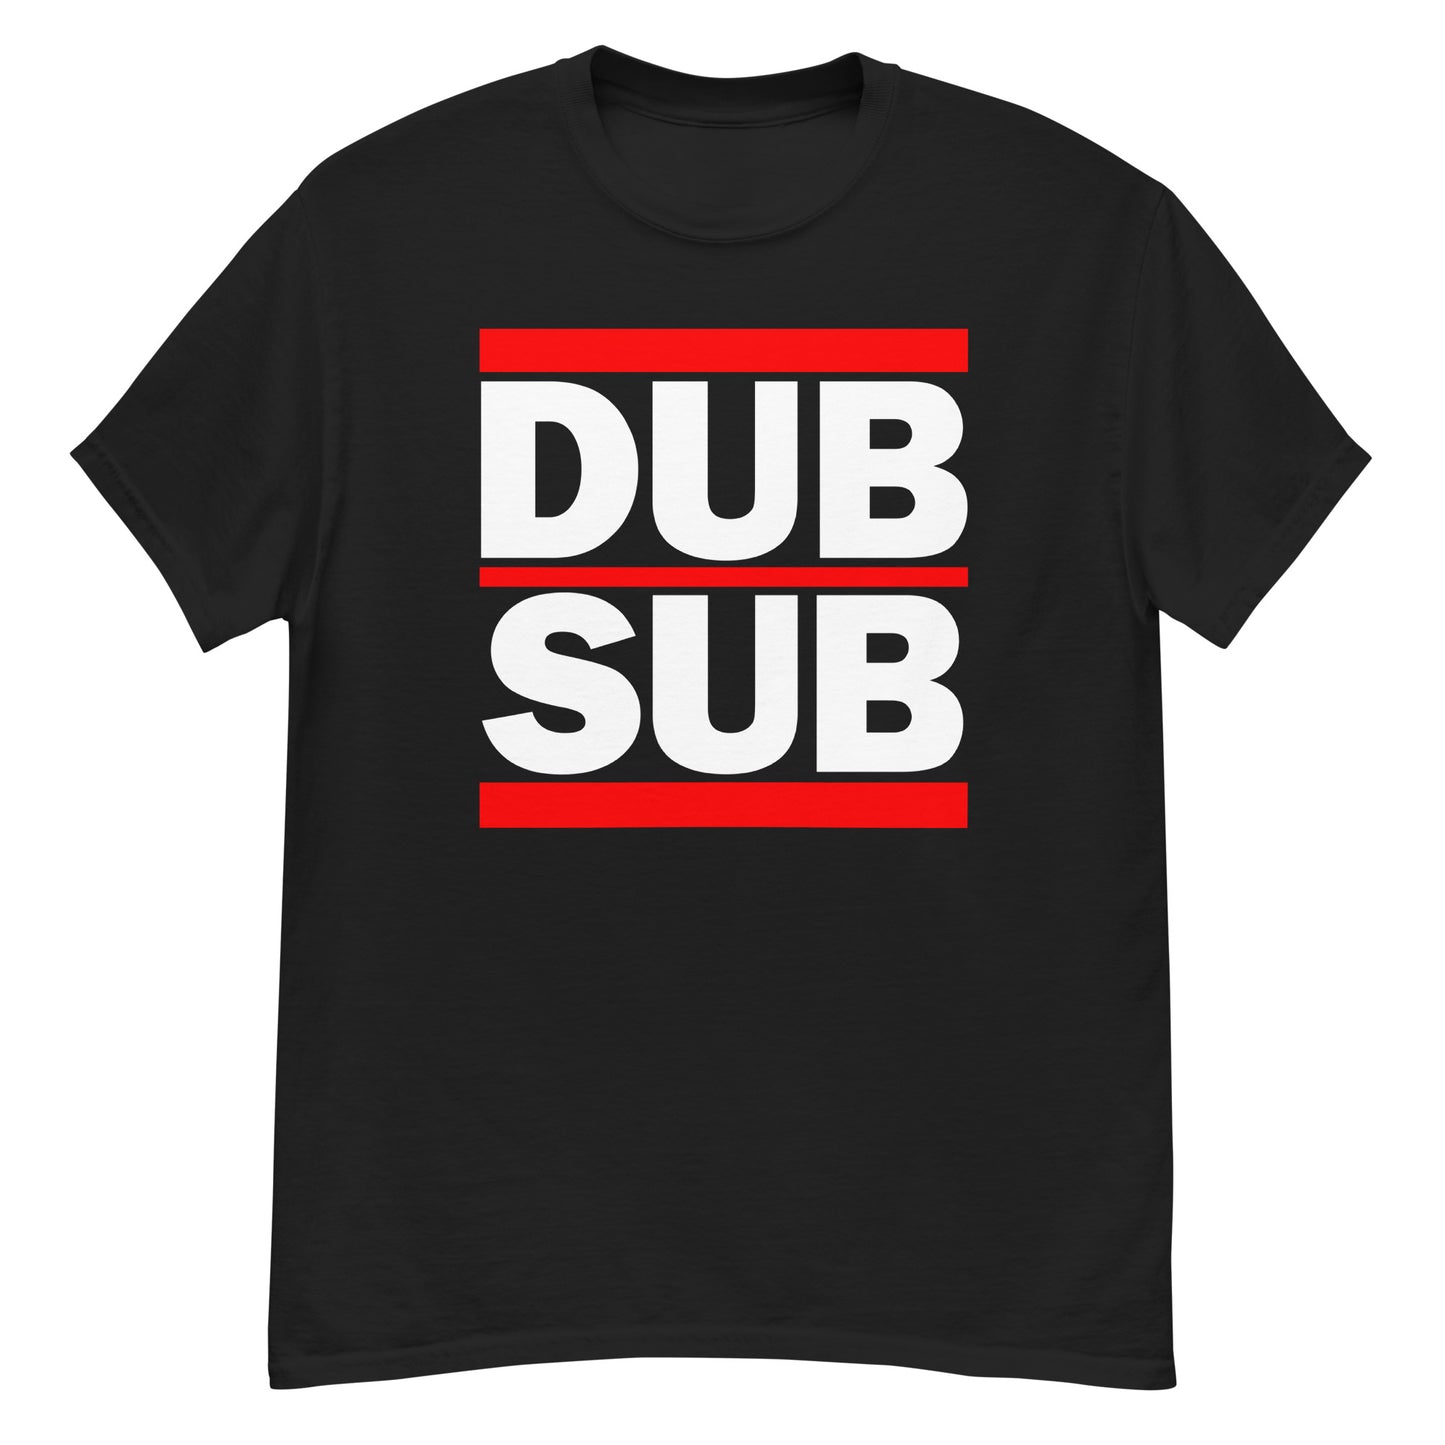 DUB over SUB t-shirt